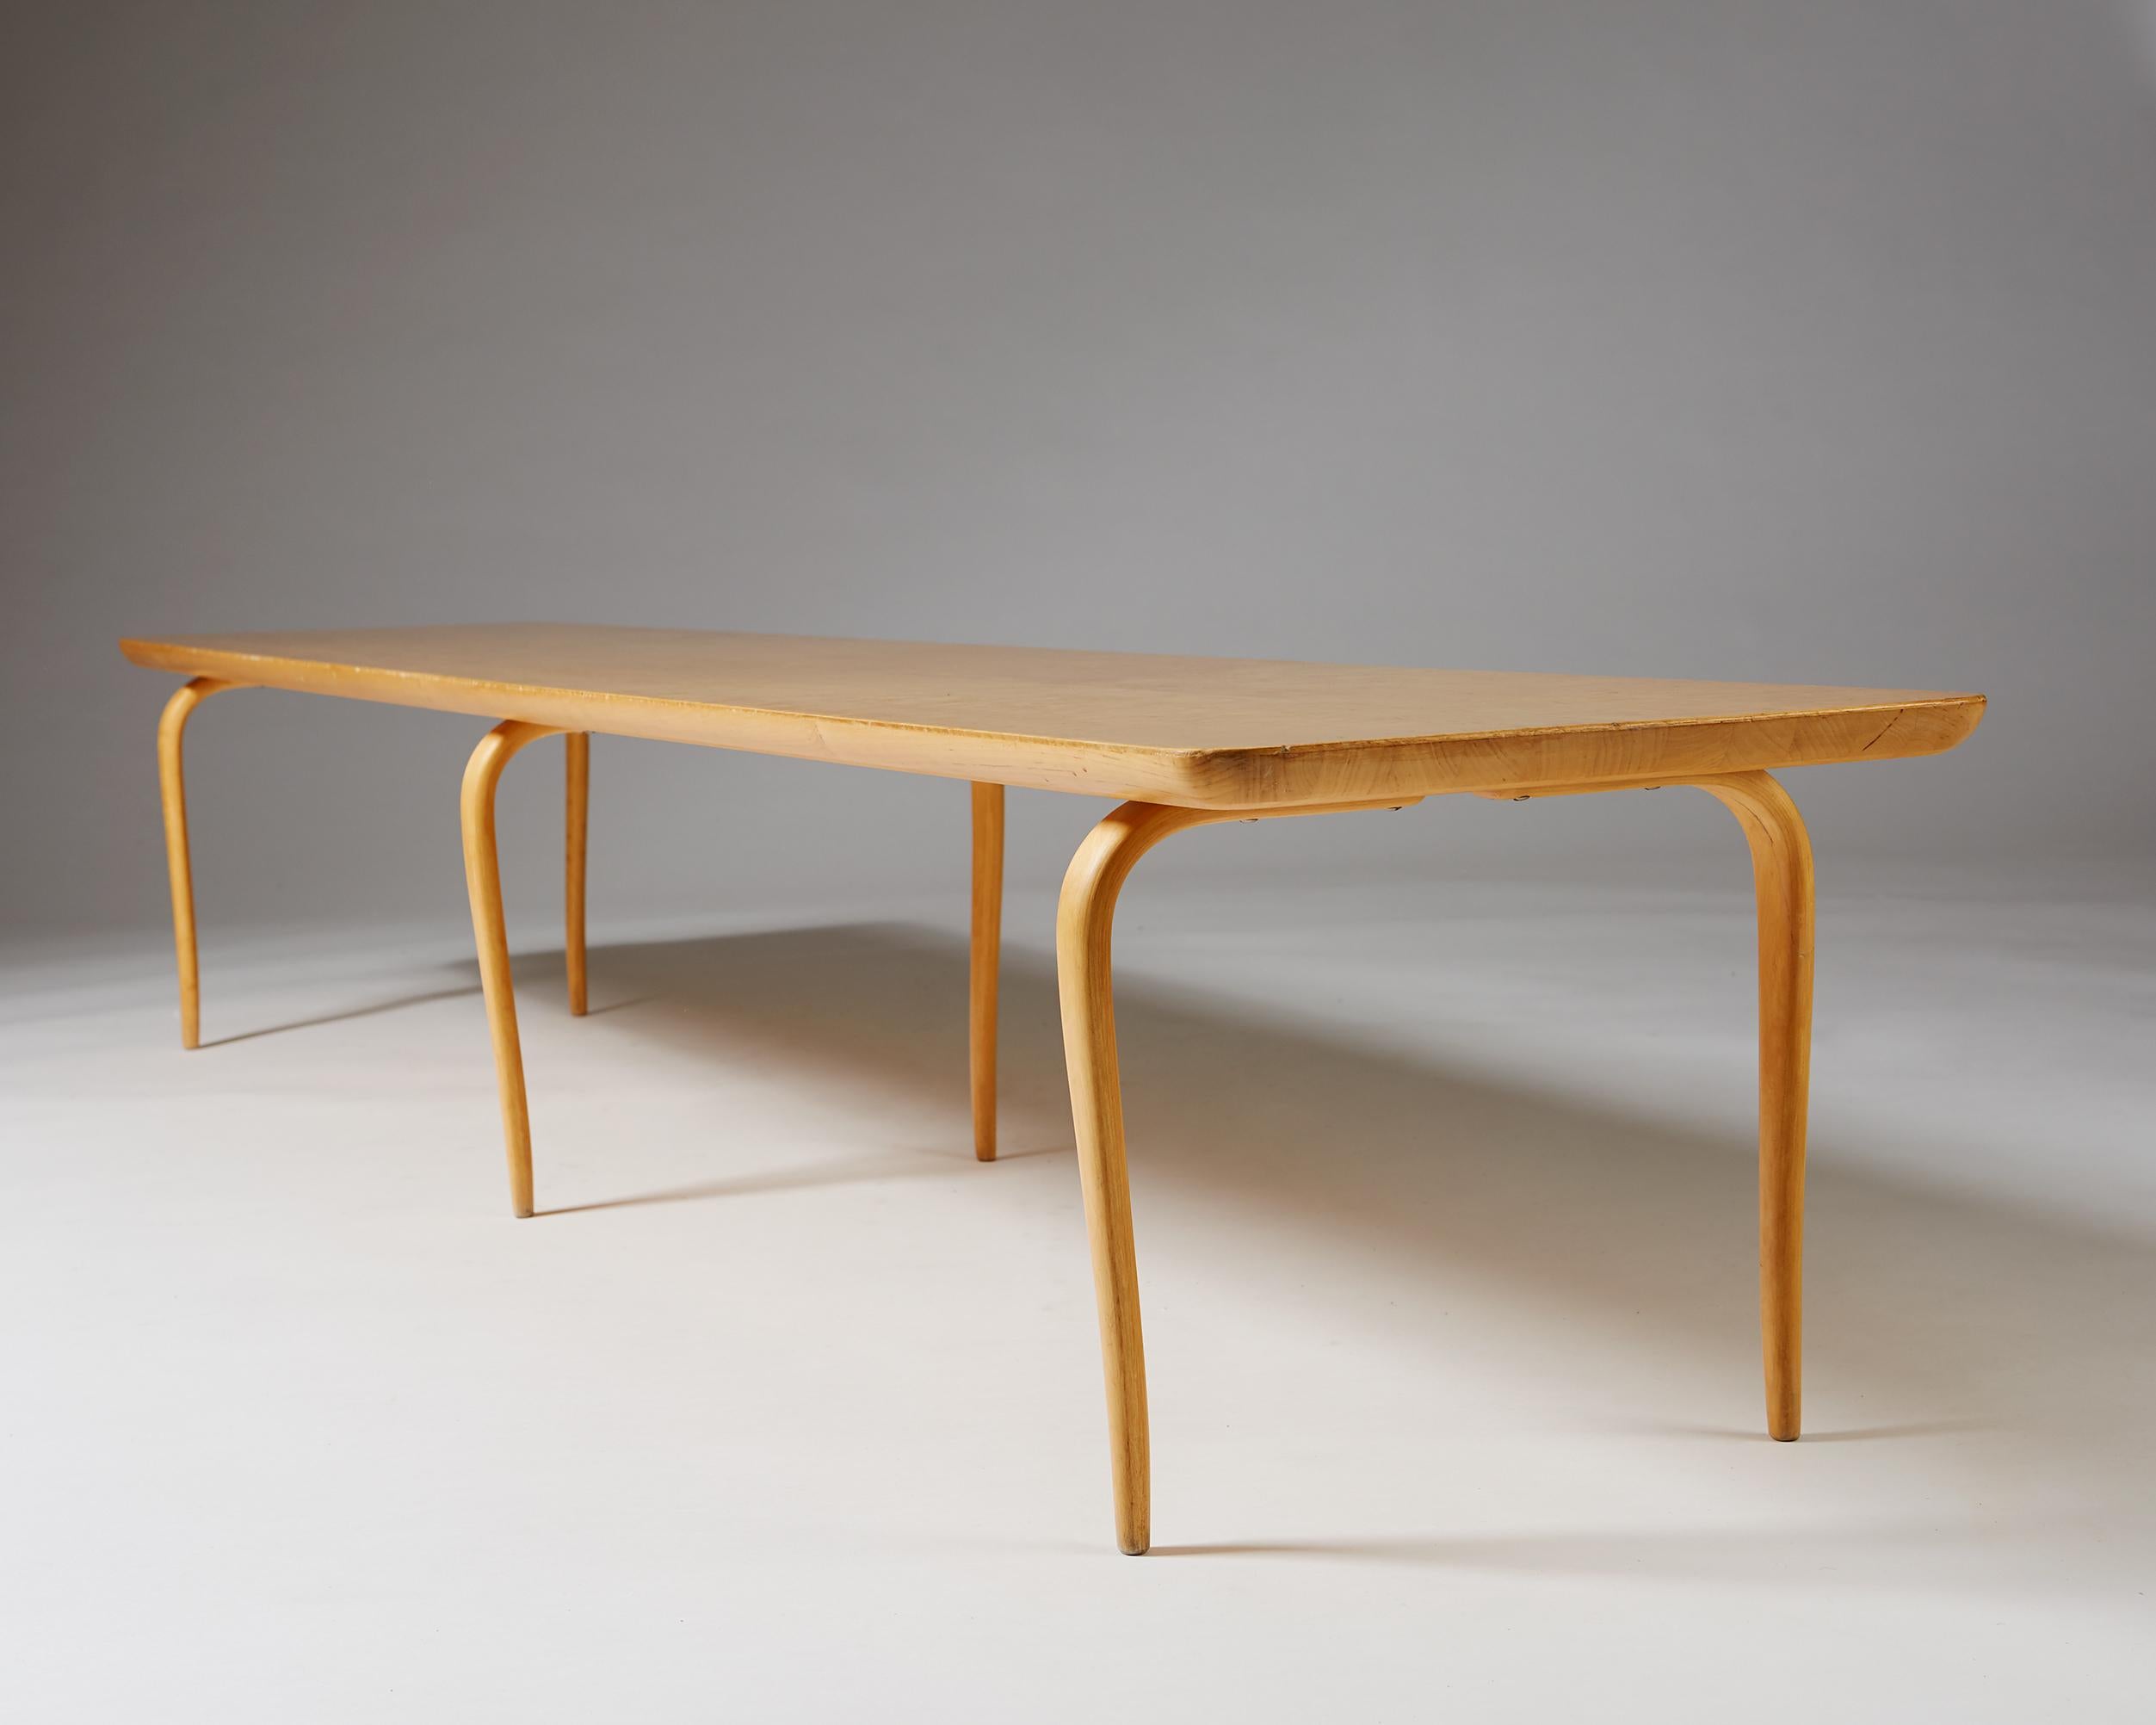 Swedish Bench or Coffee Table “Annika” Designed by Bruno Mathsson for Karl Mathsson